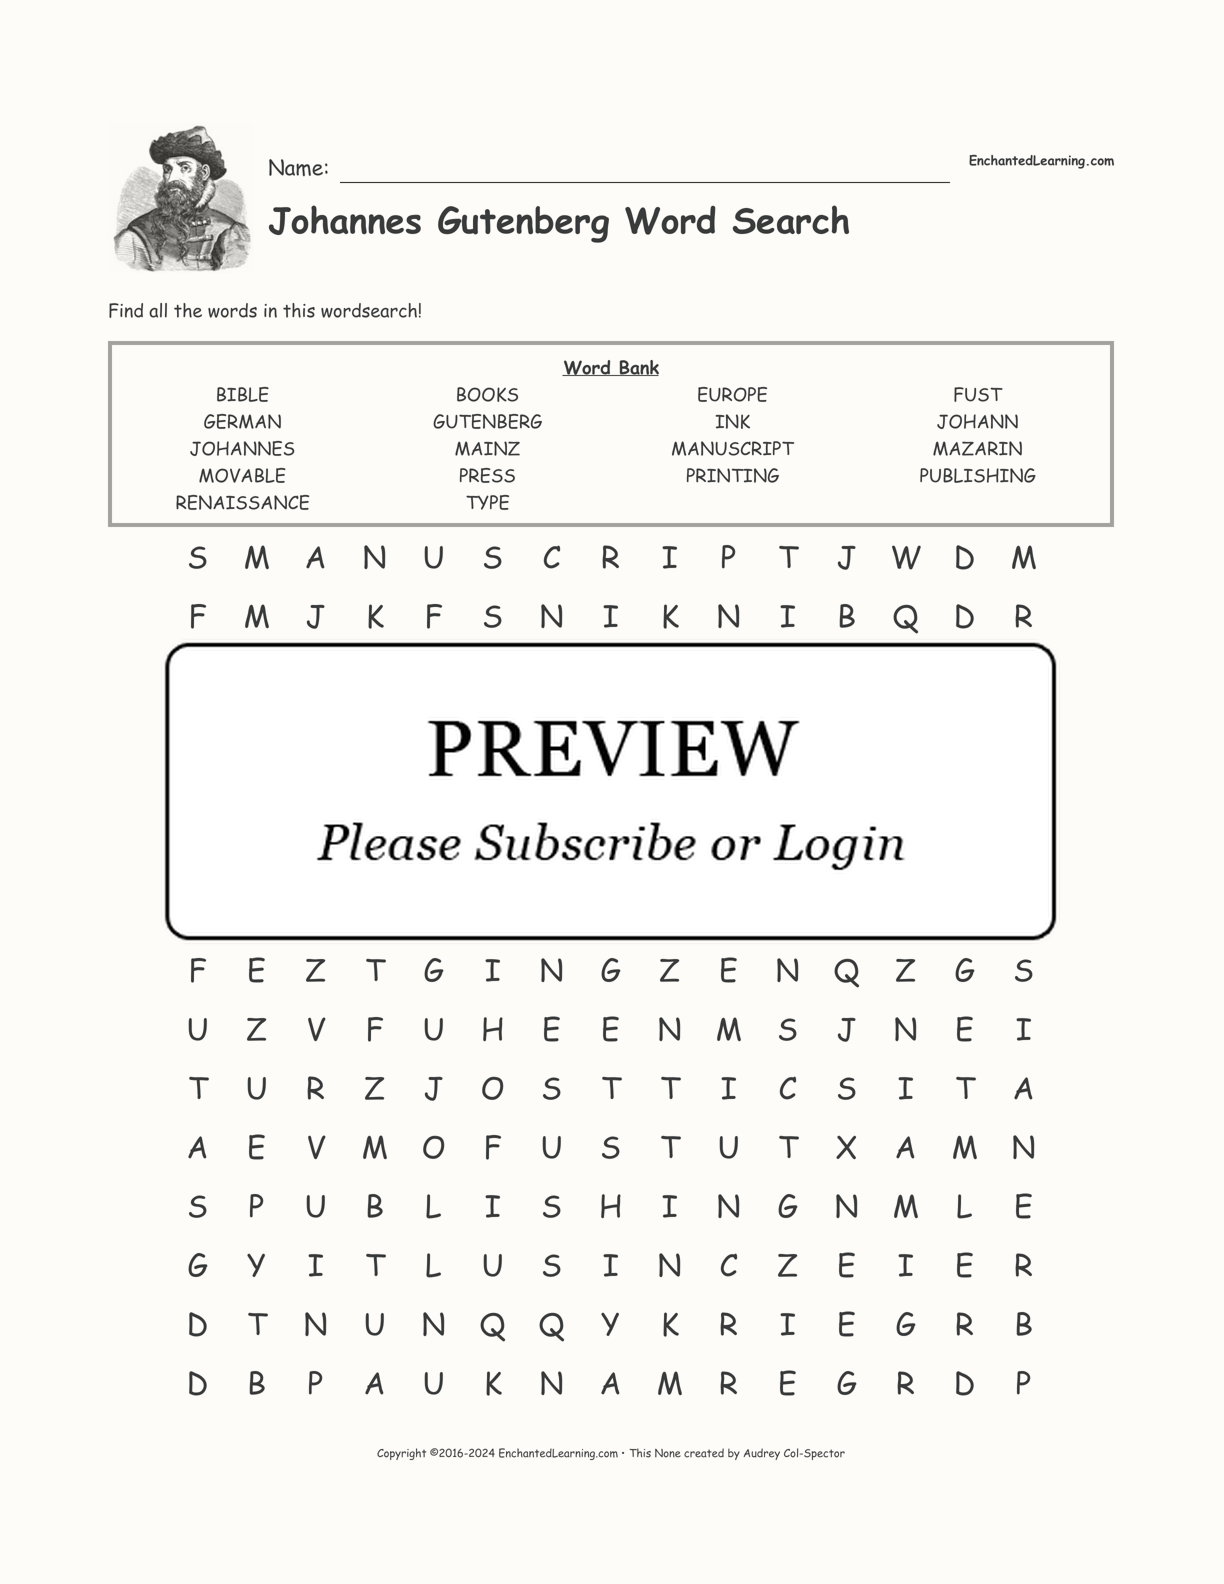 Johannes Gutenberg Word Search interactive worksheet page 1